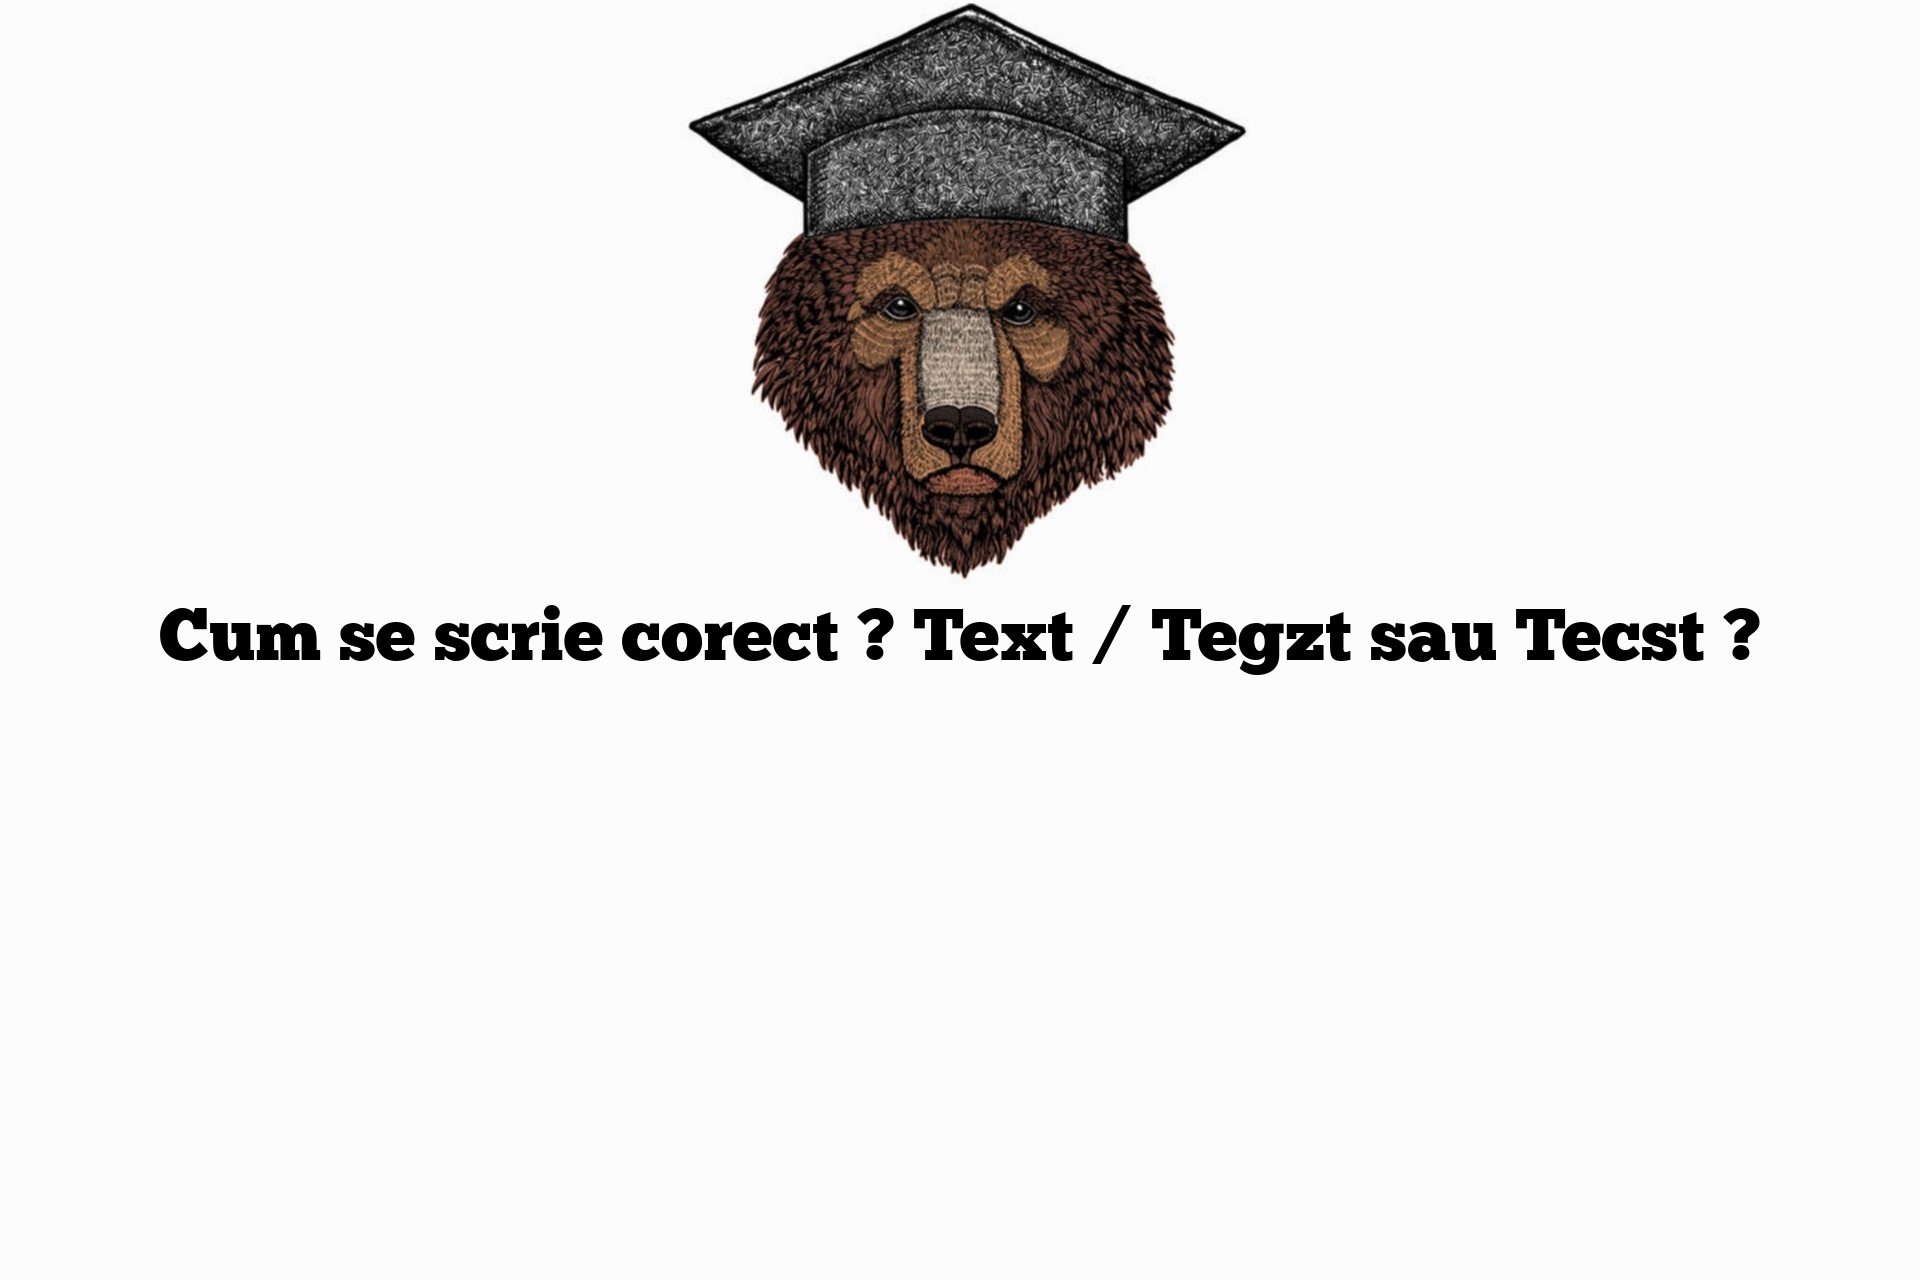 Cum se scrie corect ? Text / Tegzt sau Tecst ?